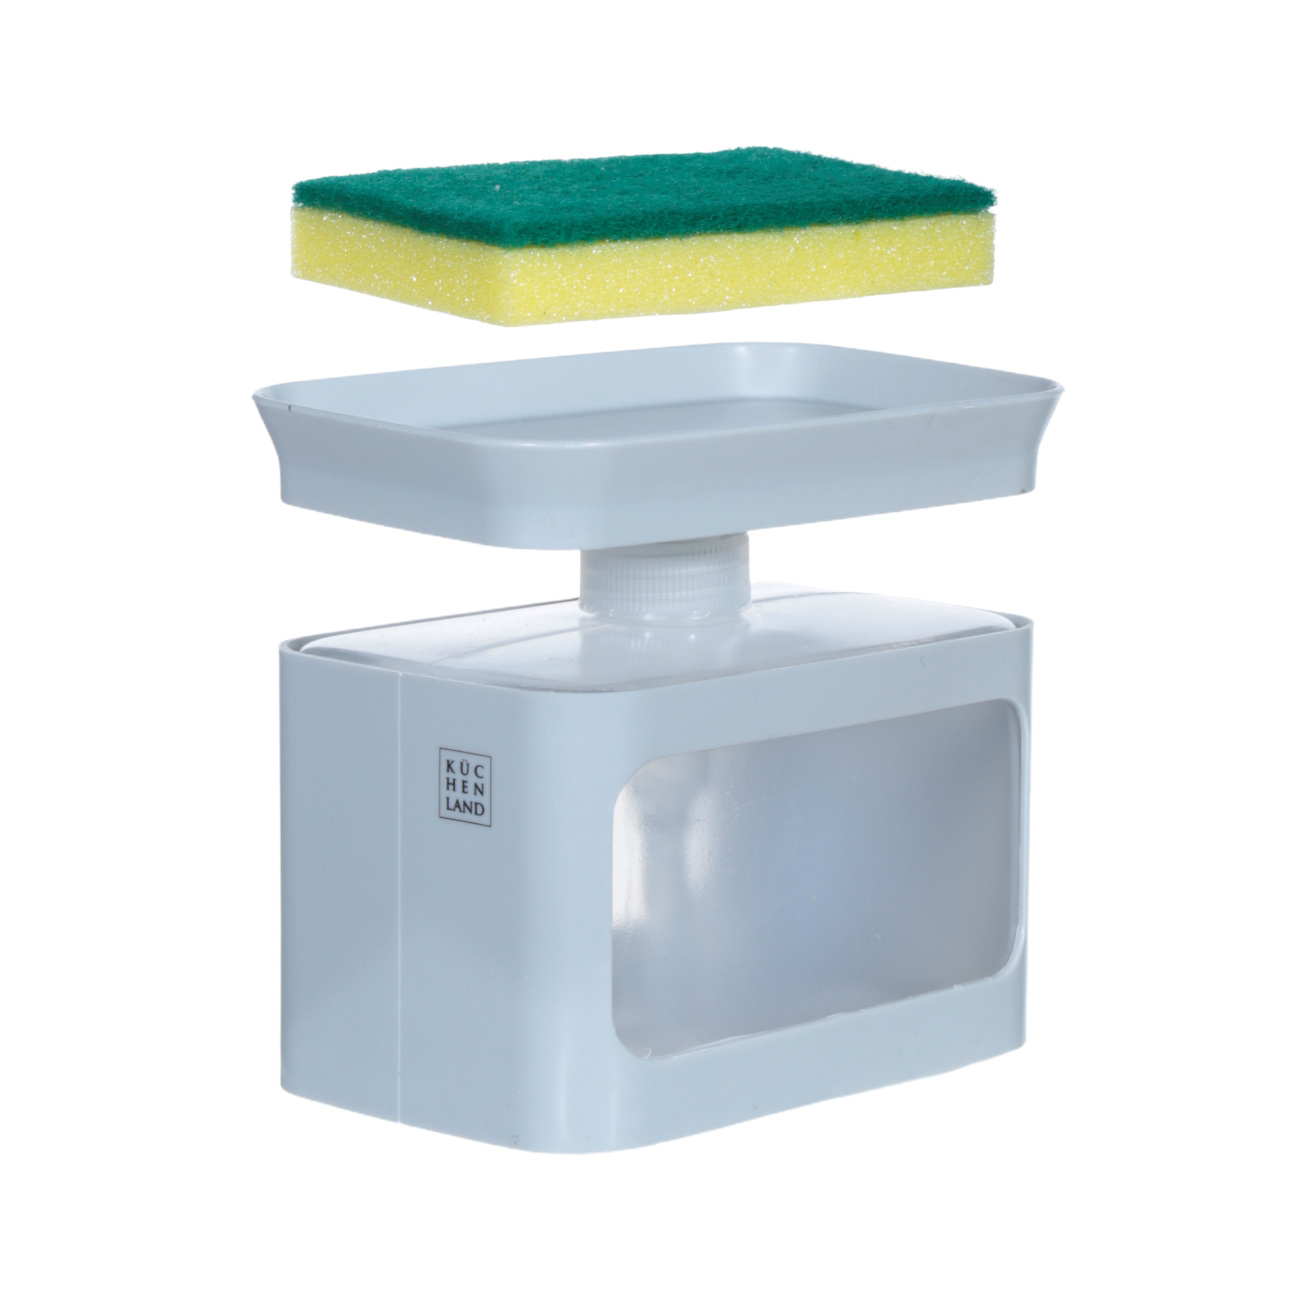 Detergent dispenser, 680 ml, with sponge, Platform, Plastic, Grey, Keeping изображение № 2